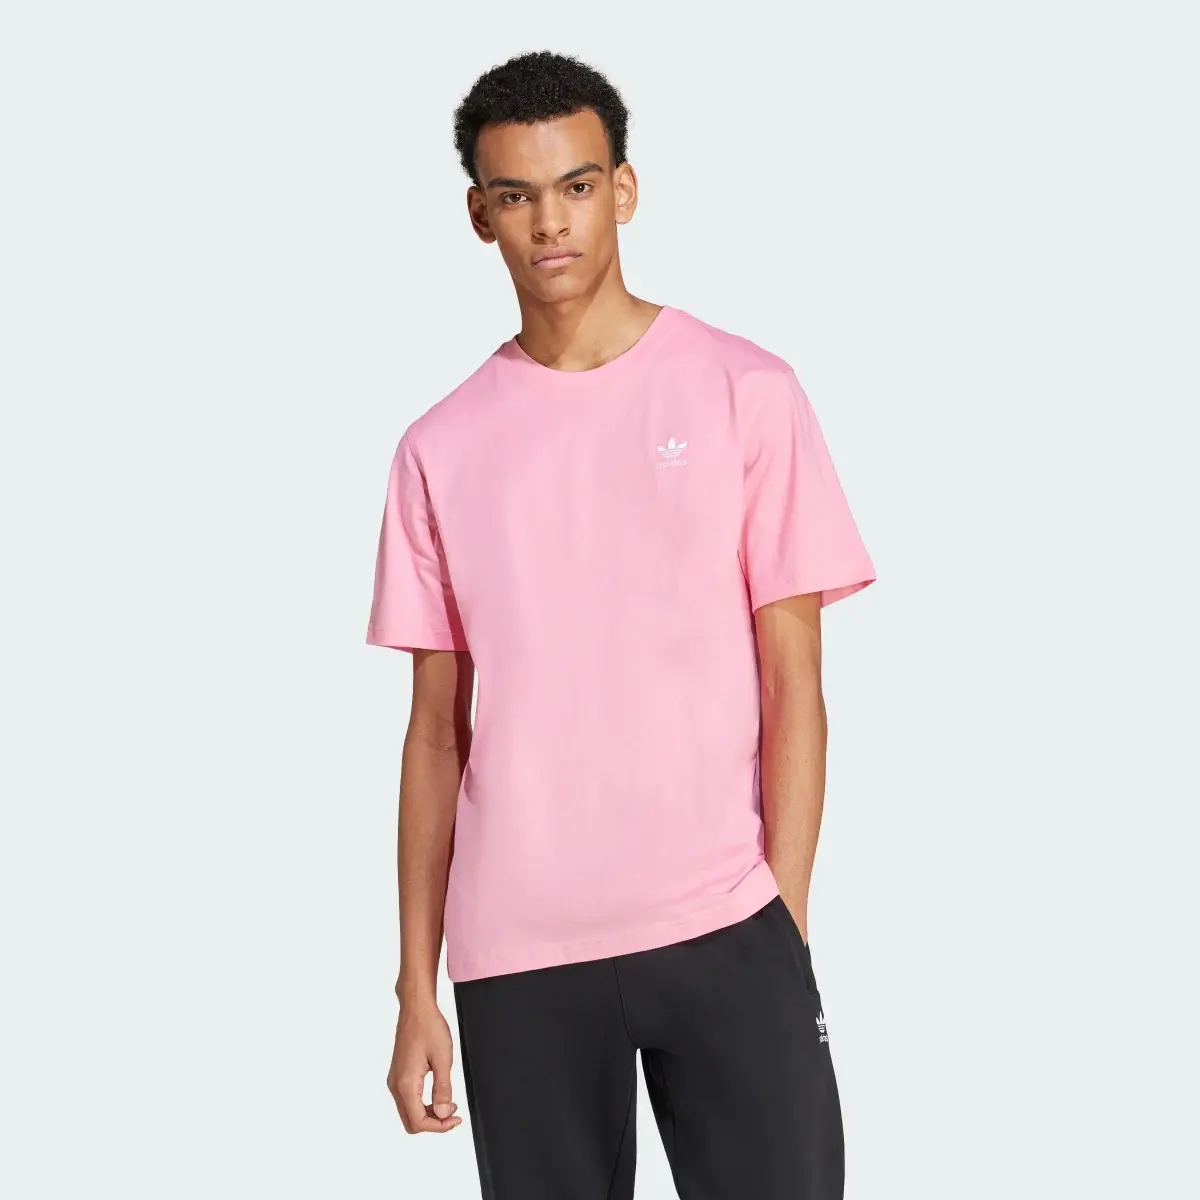 Adidas T-shirt rose. 2